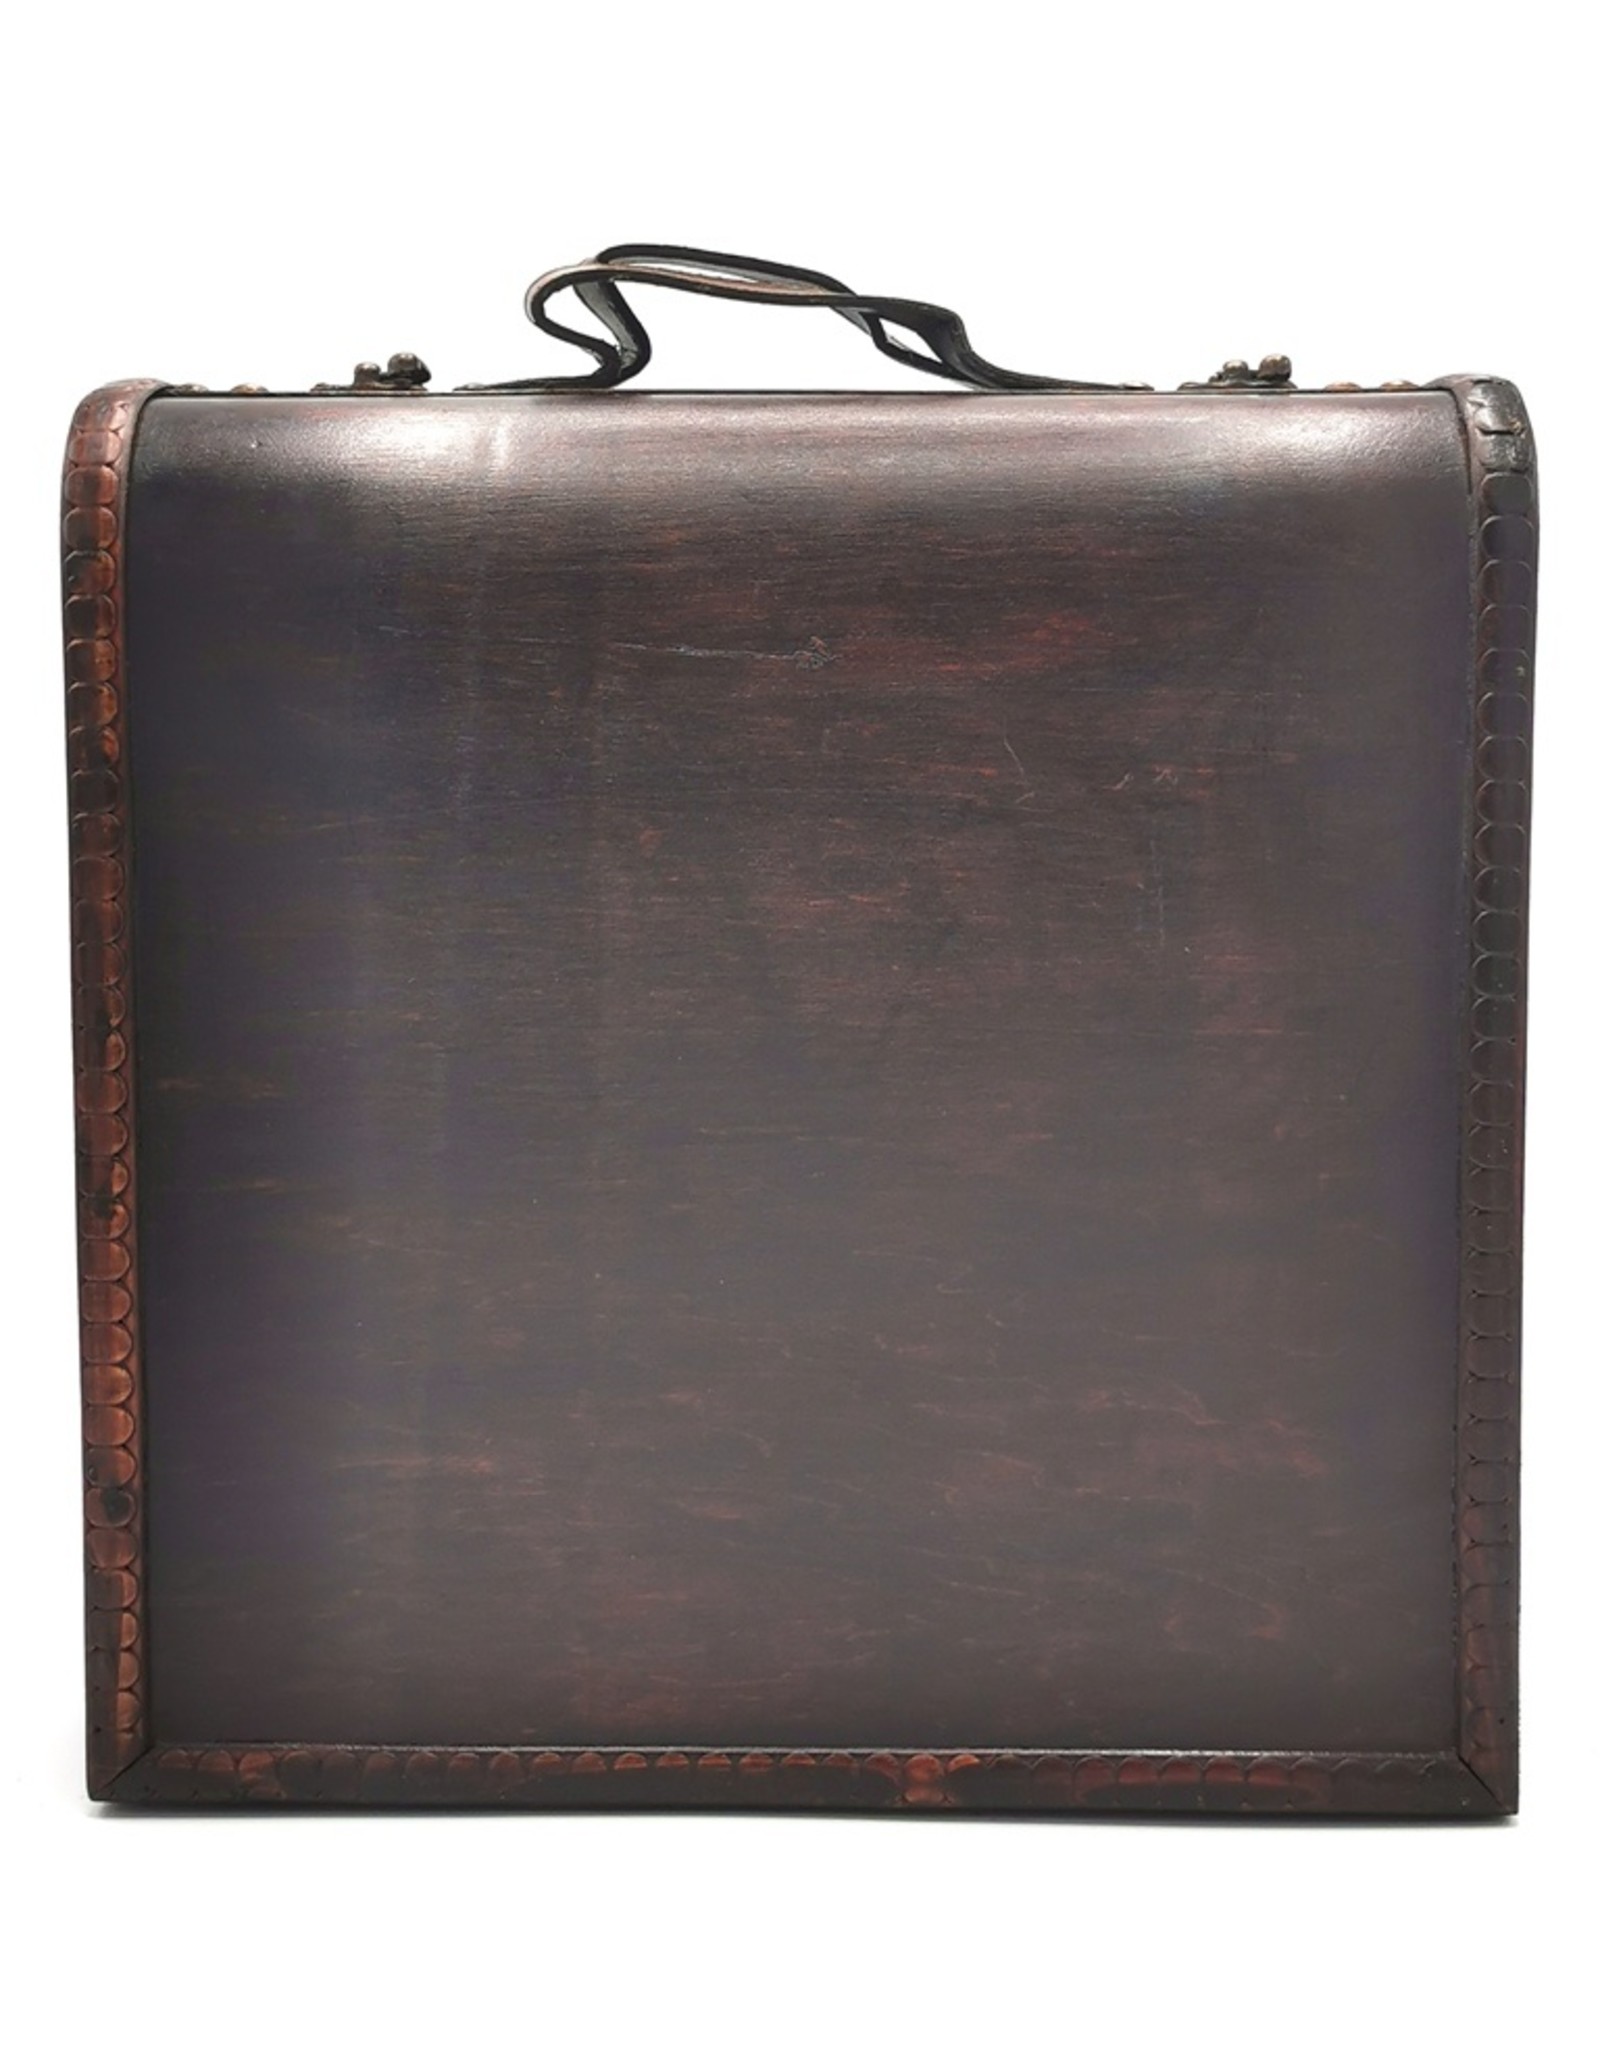 Trukado Miscellaneous - Wooden Suitcase Set of 4 pieces Steampunk - Victorian